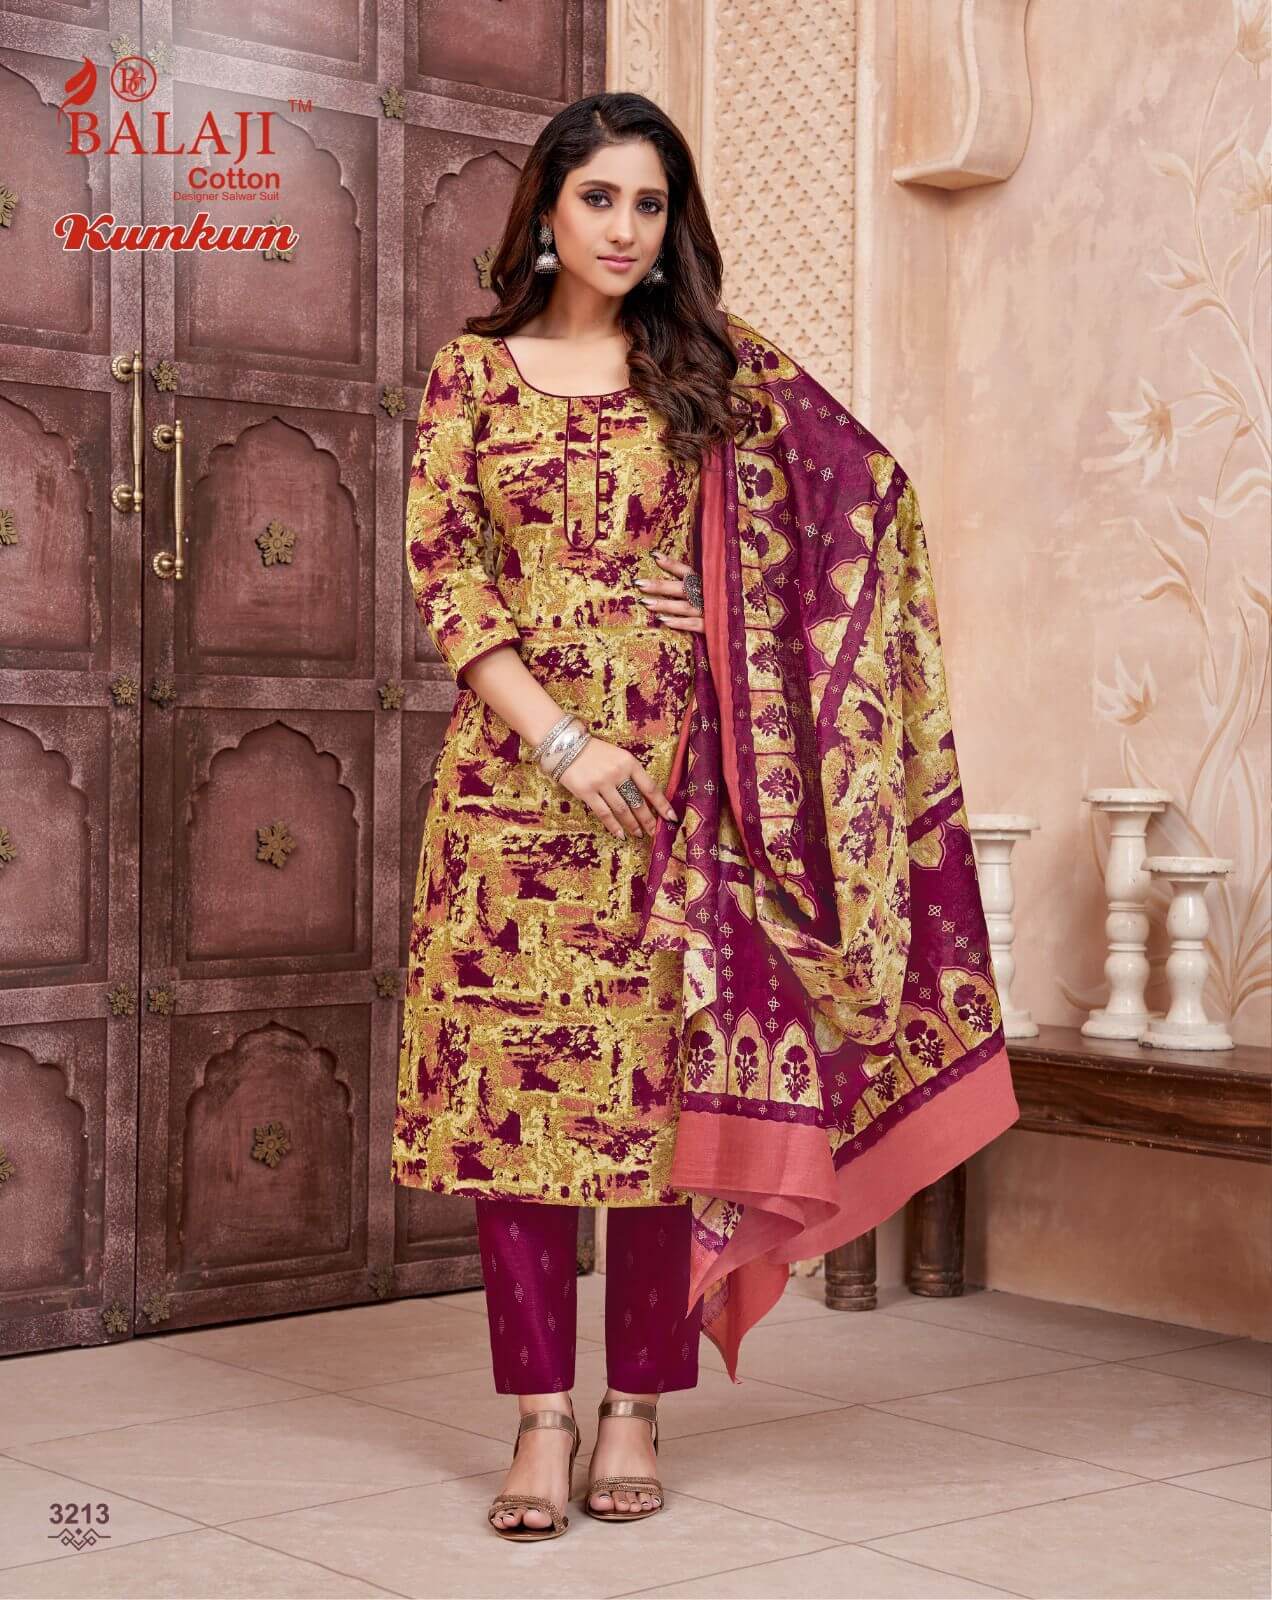 Balaji Cotton Kumkum Vol 32 B Readymade Dress collection 9